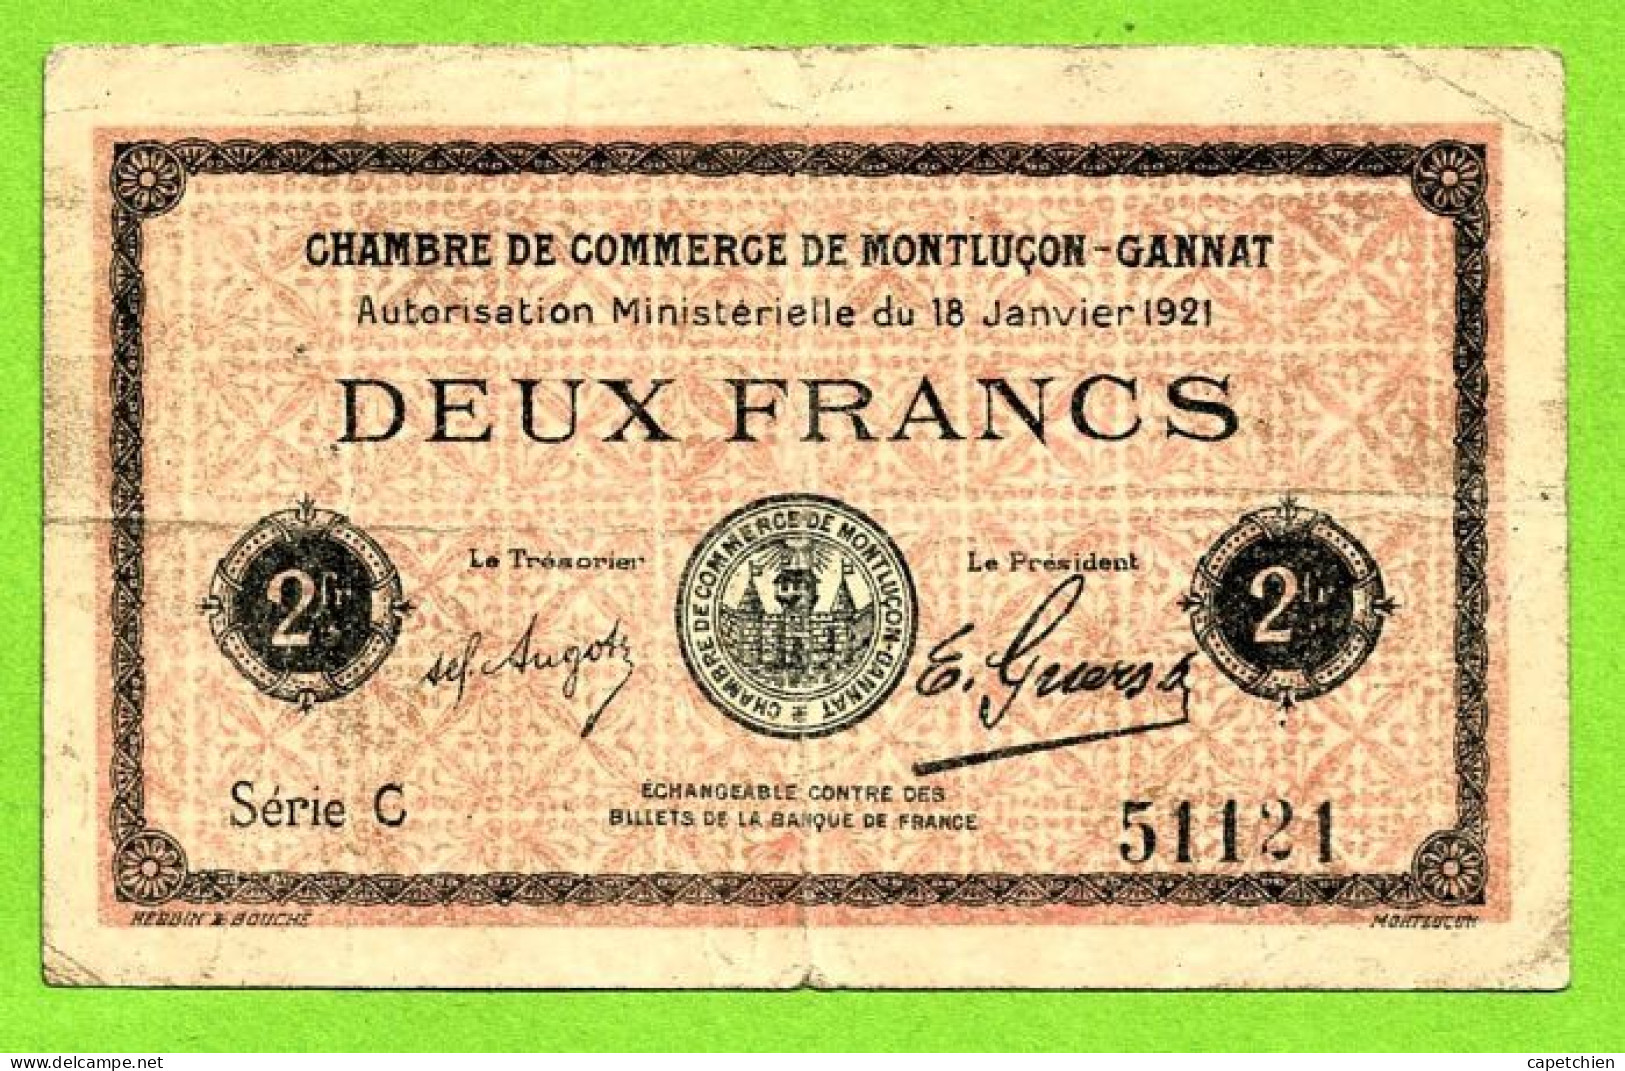 FRANCE / CHAMBRE De COMMERCE De MONTLUÇON - GANNAT / 2 FRANCS / 18 JANVIER 1921  N° 51121 / SERIE C - Handelskammer